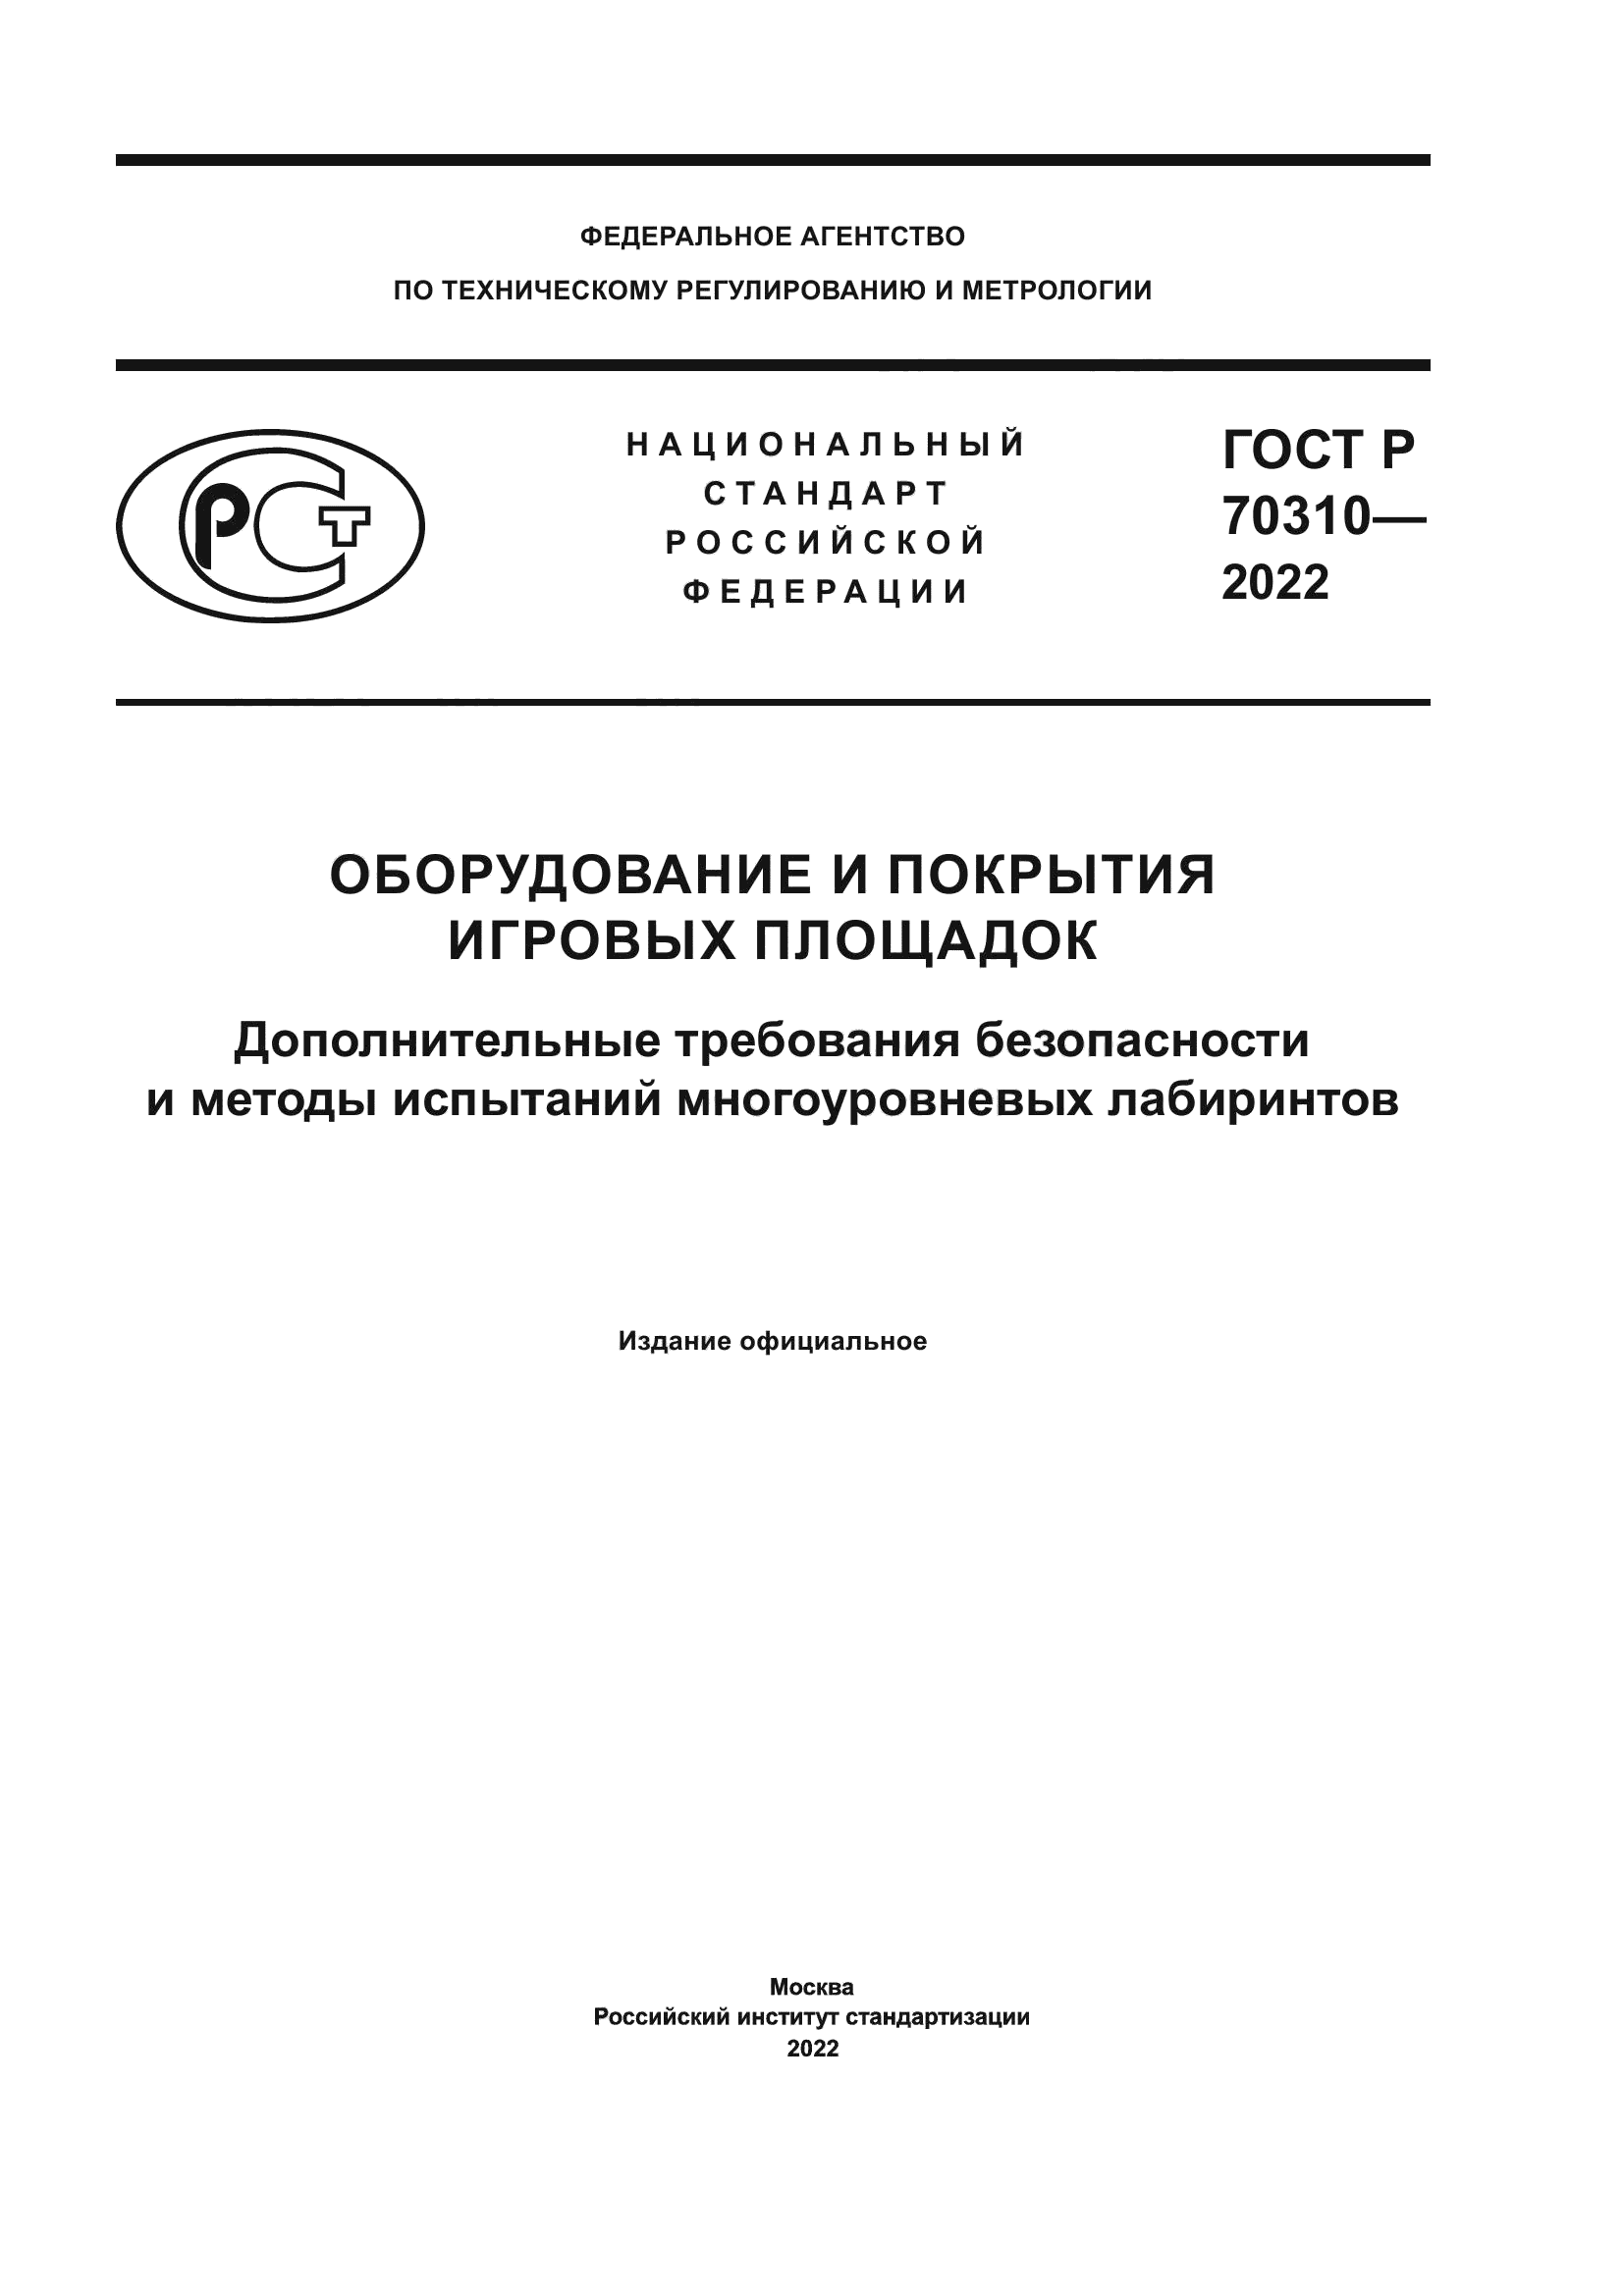 ГОСТ Р 70310-2022